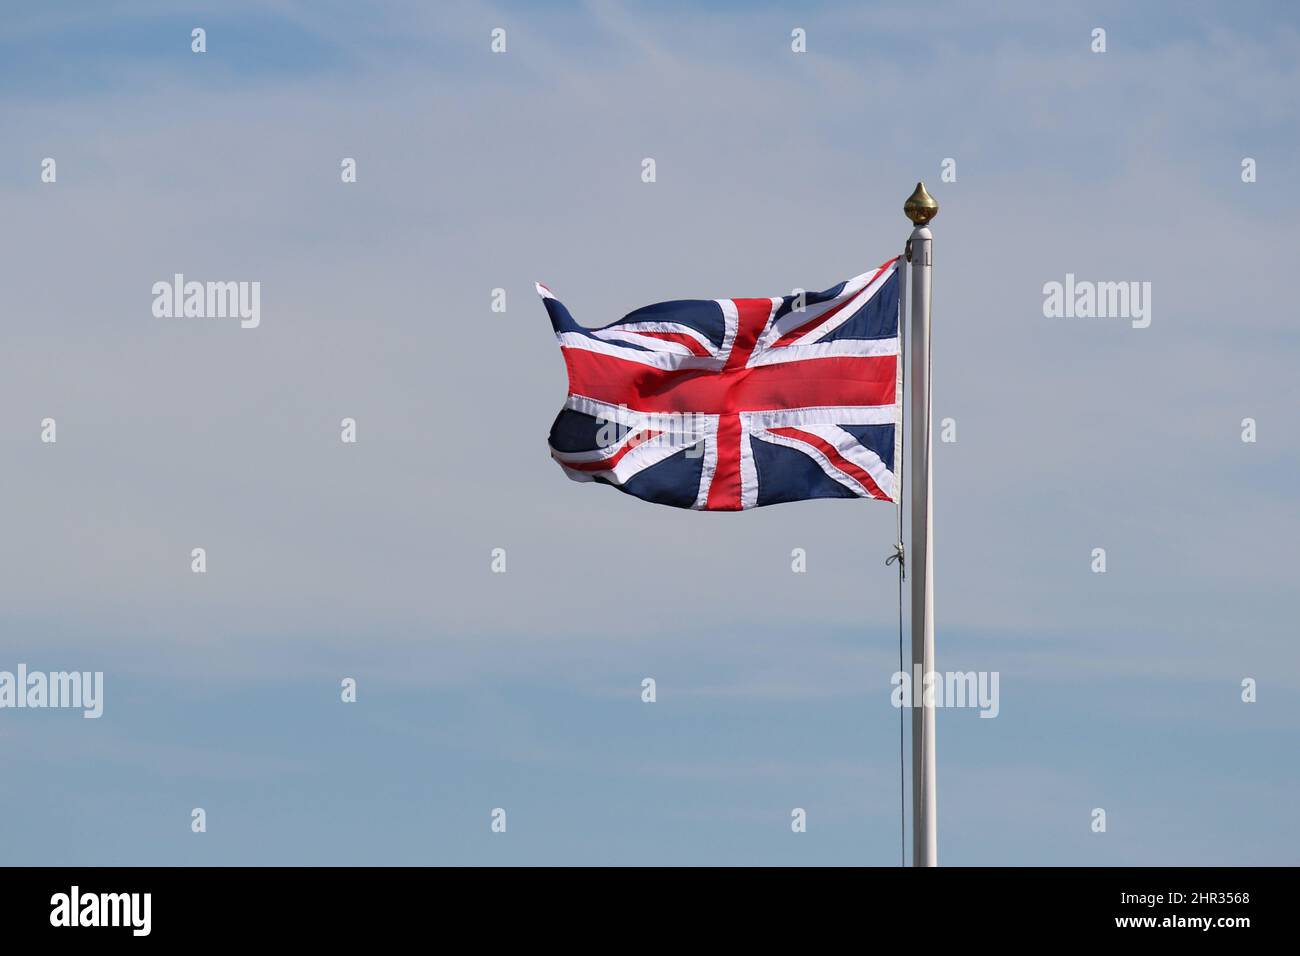 Union Jack Flag on a pole flying against sky background Stock Photo